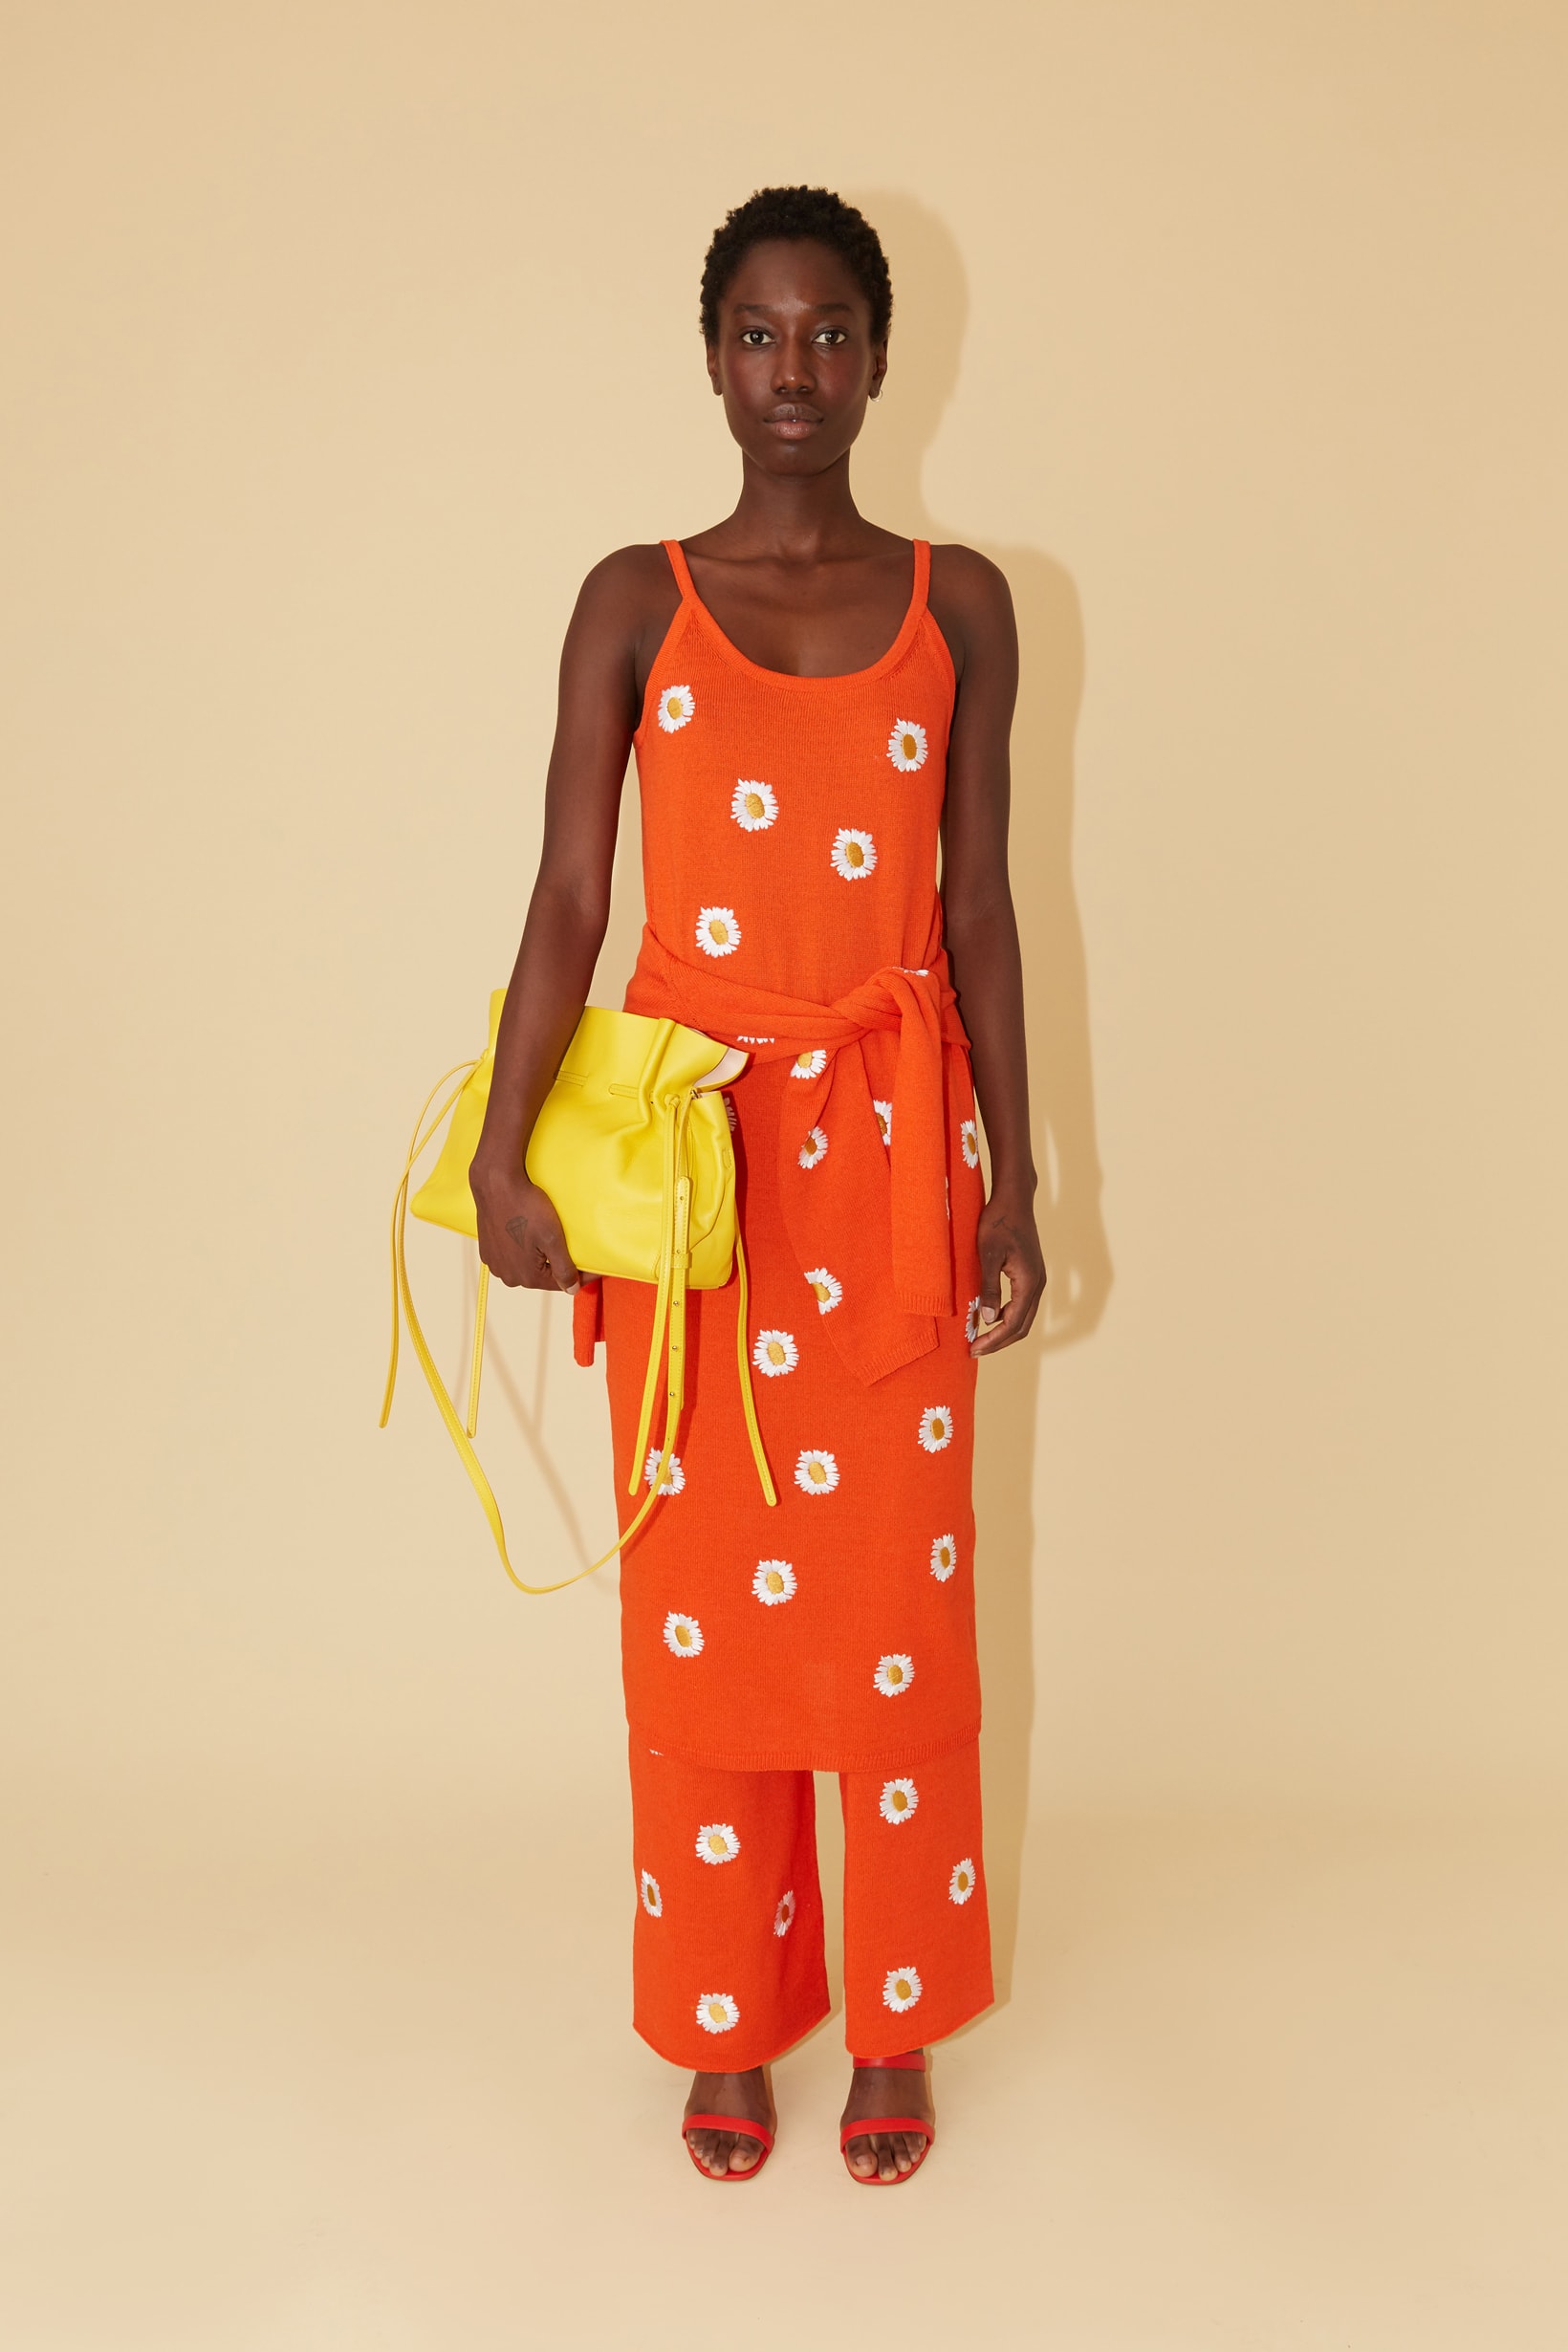 Mansur Gavriel Spring Summer 2019 Lookbook Dress Pants Orange Bag Yellow